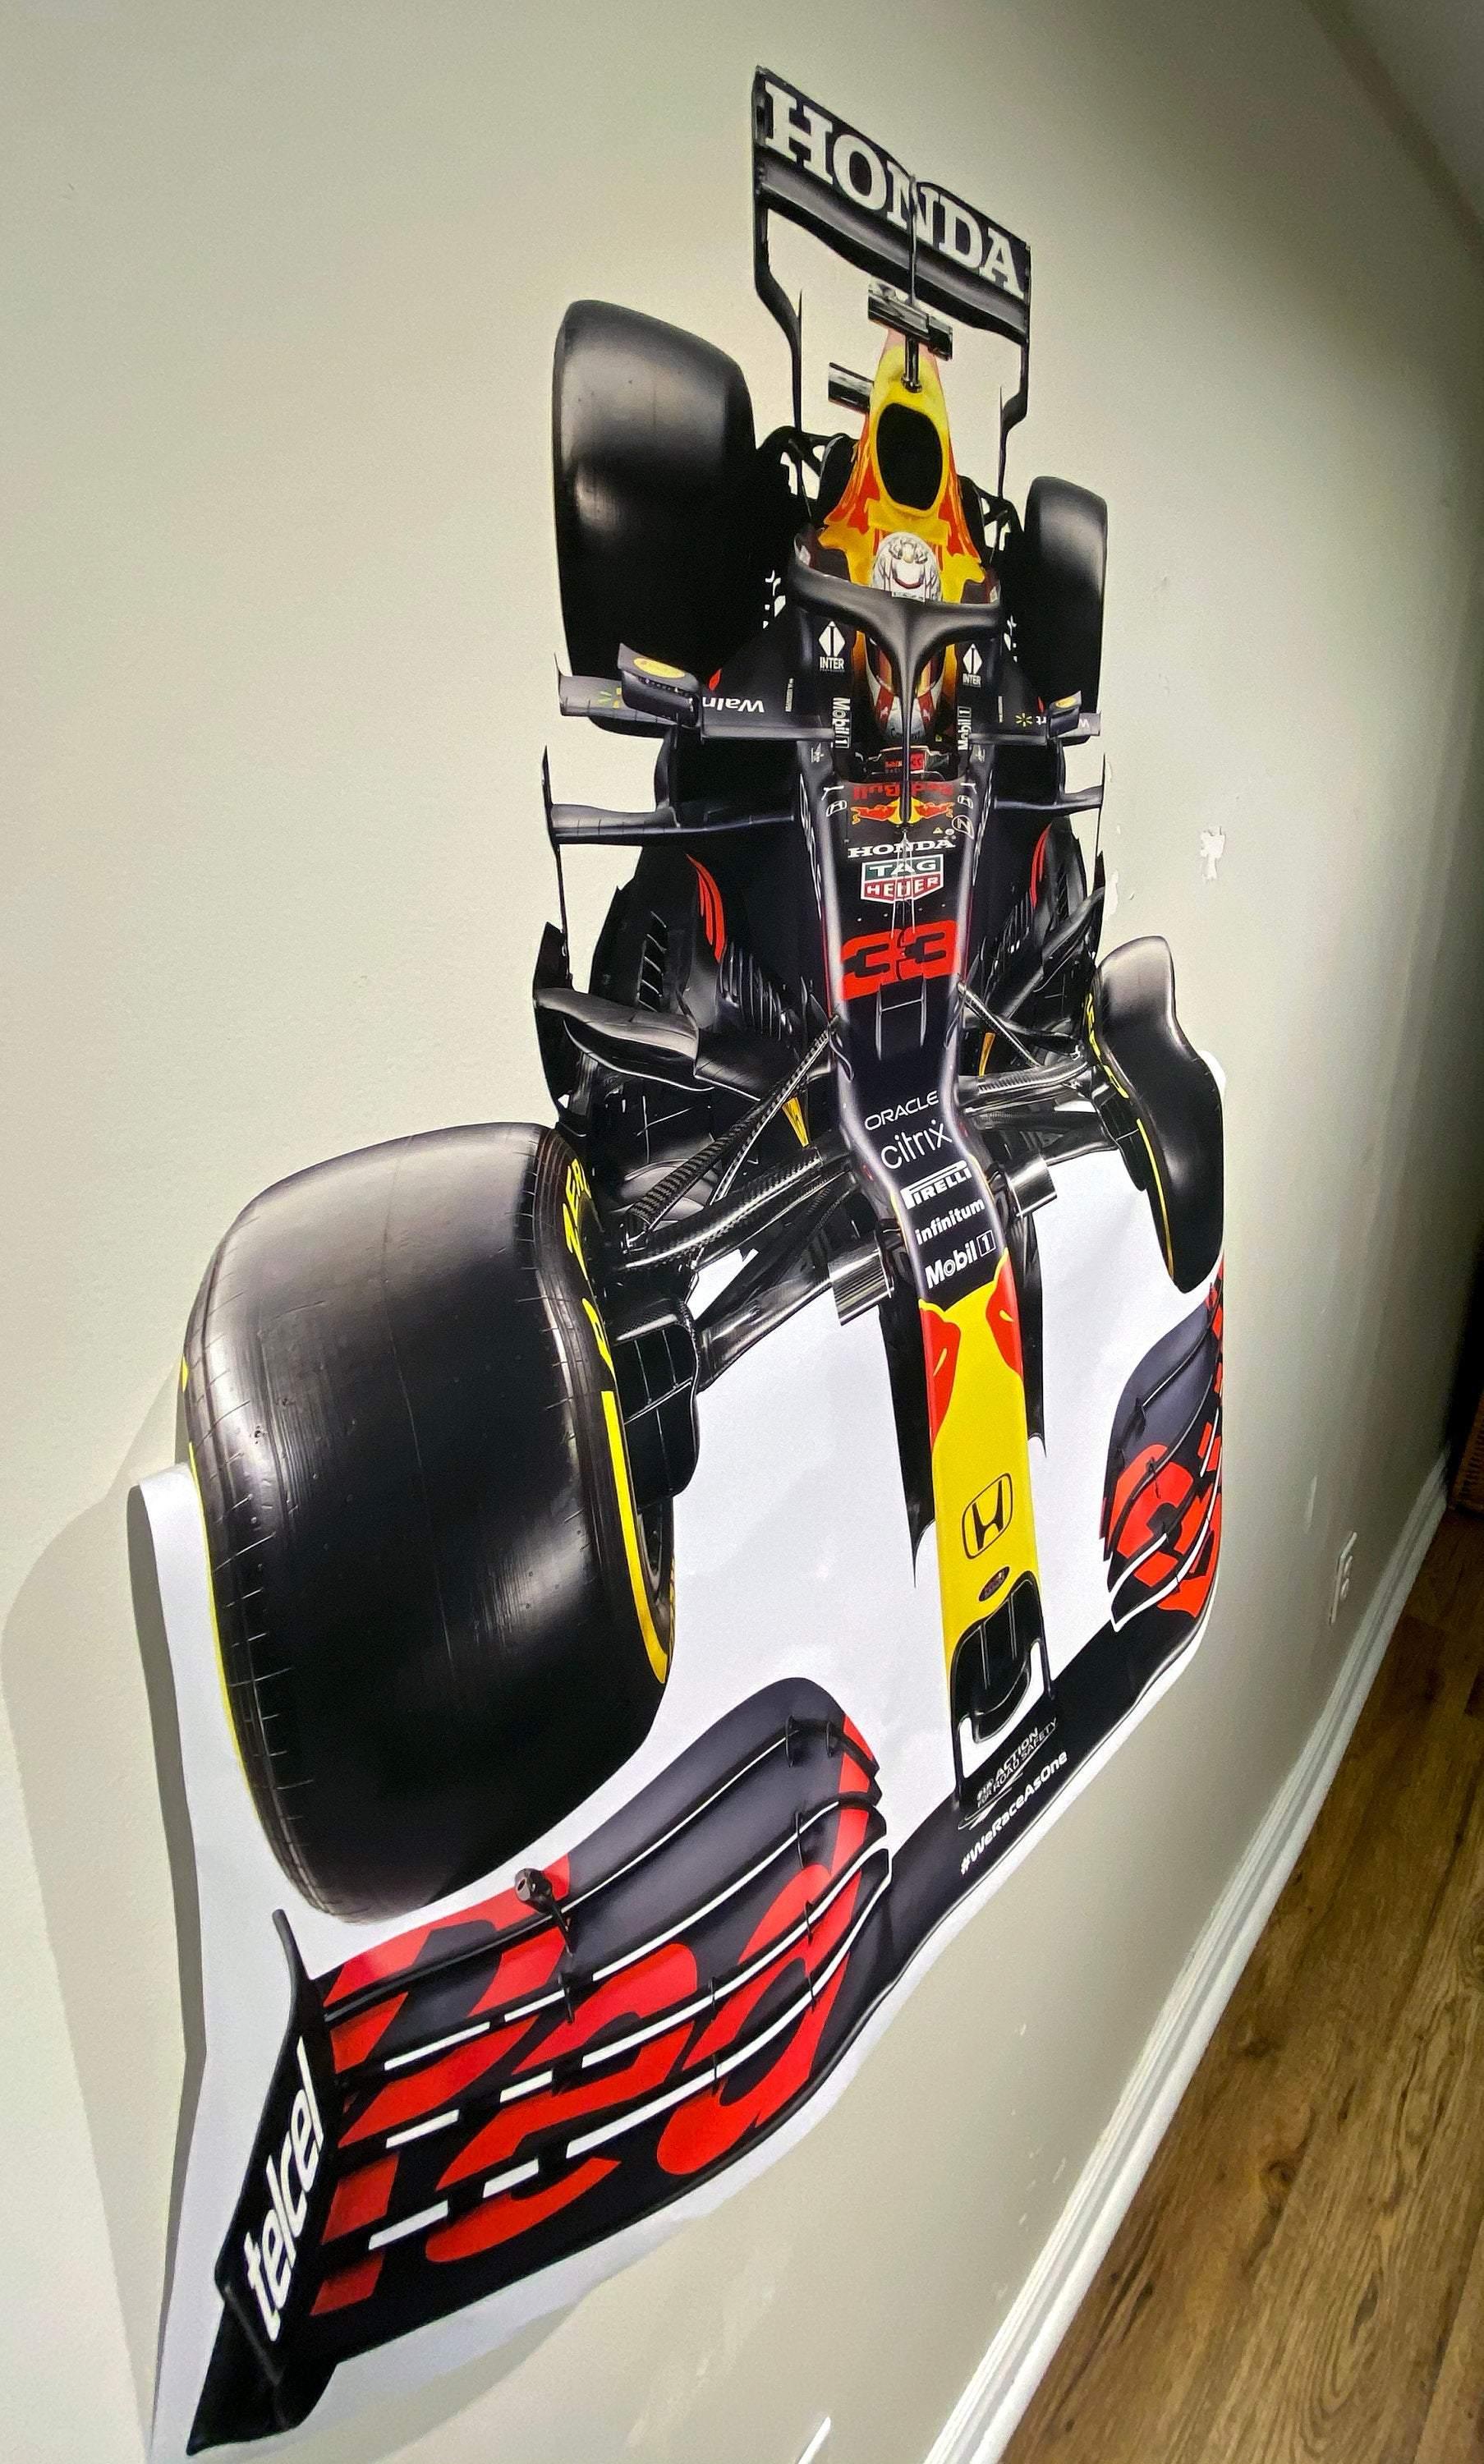 Redbull F1 2021 front facing wall decal #33 Max Verstappen 006